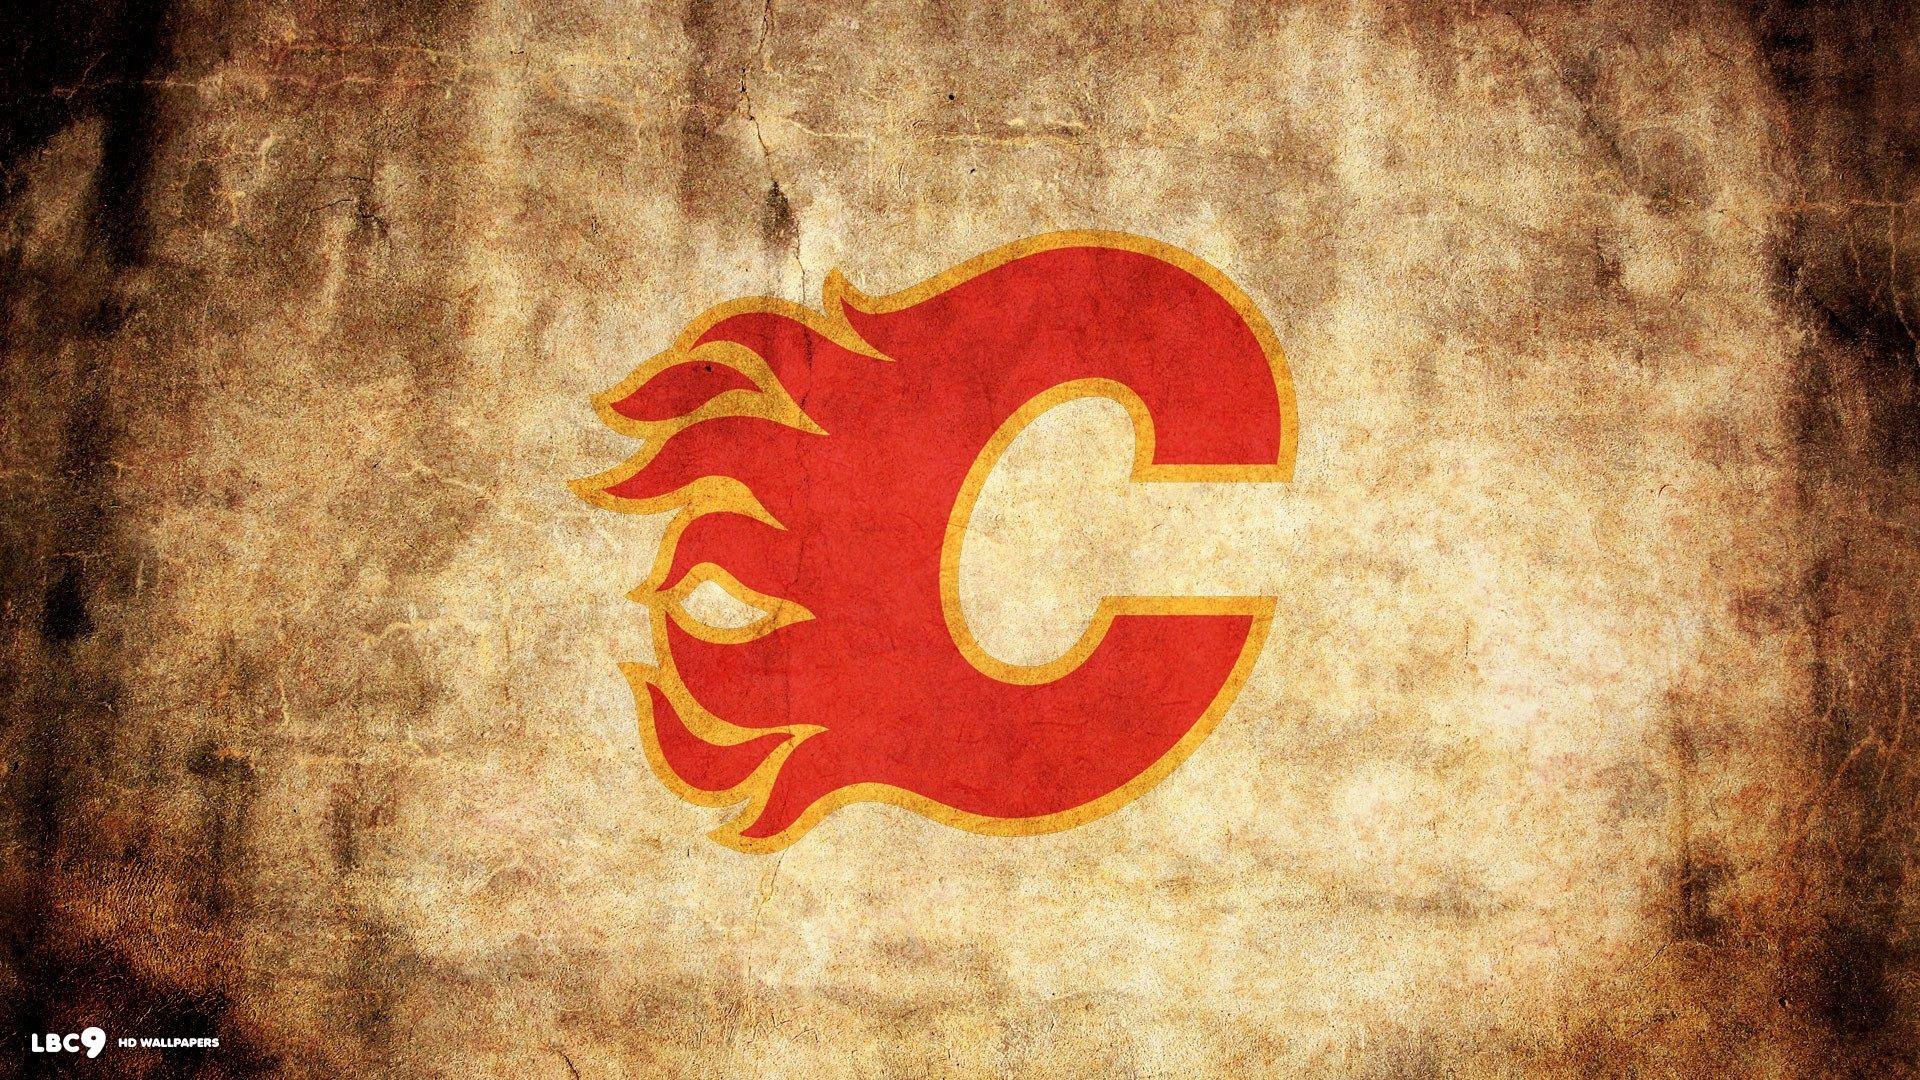 Calgary Flames Wallpaper 3 3. Hockey Teams HD Background